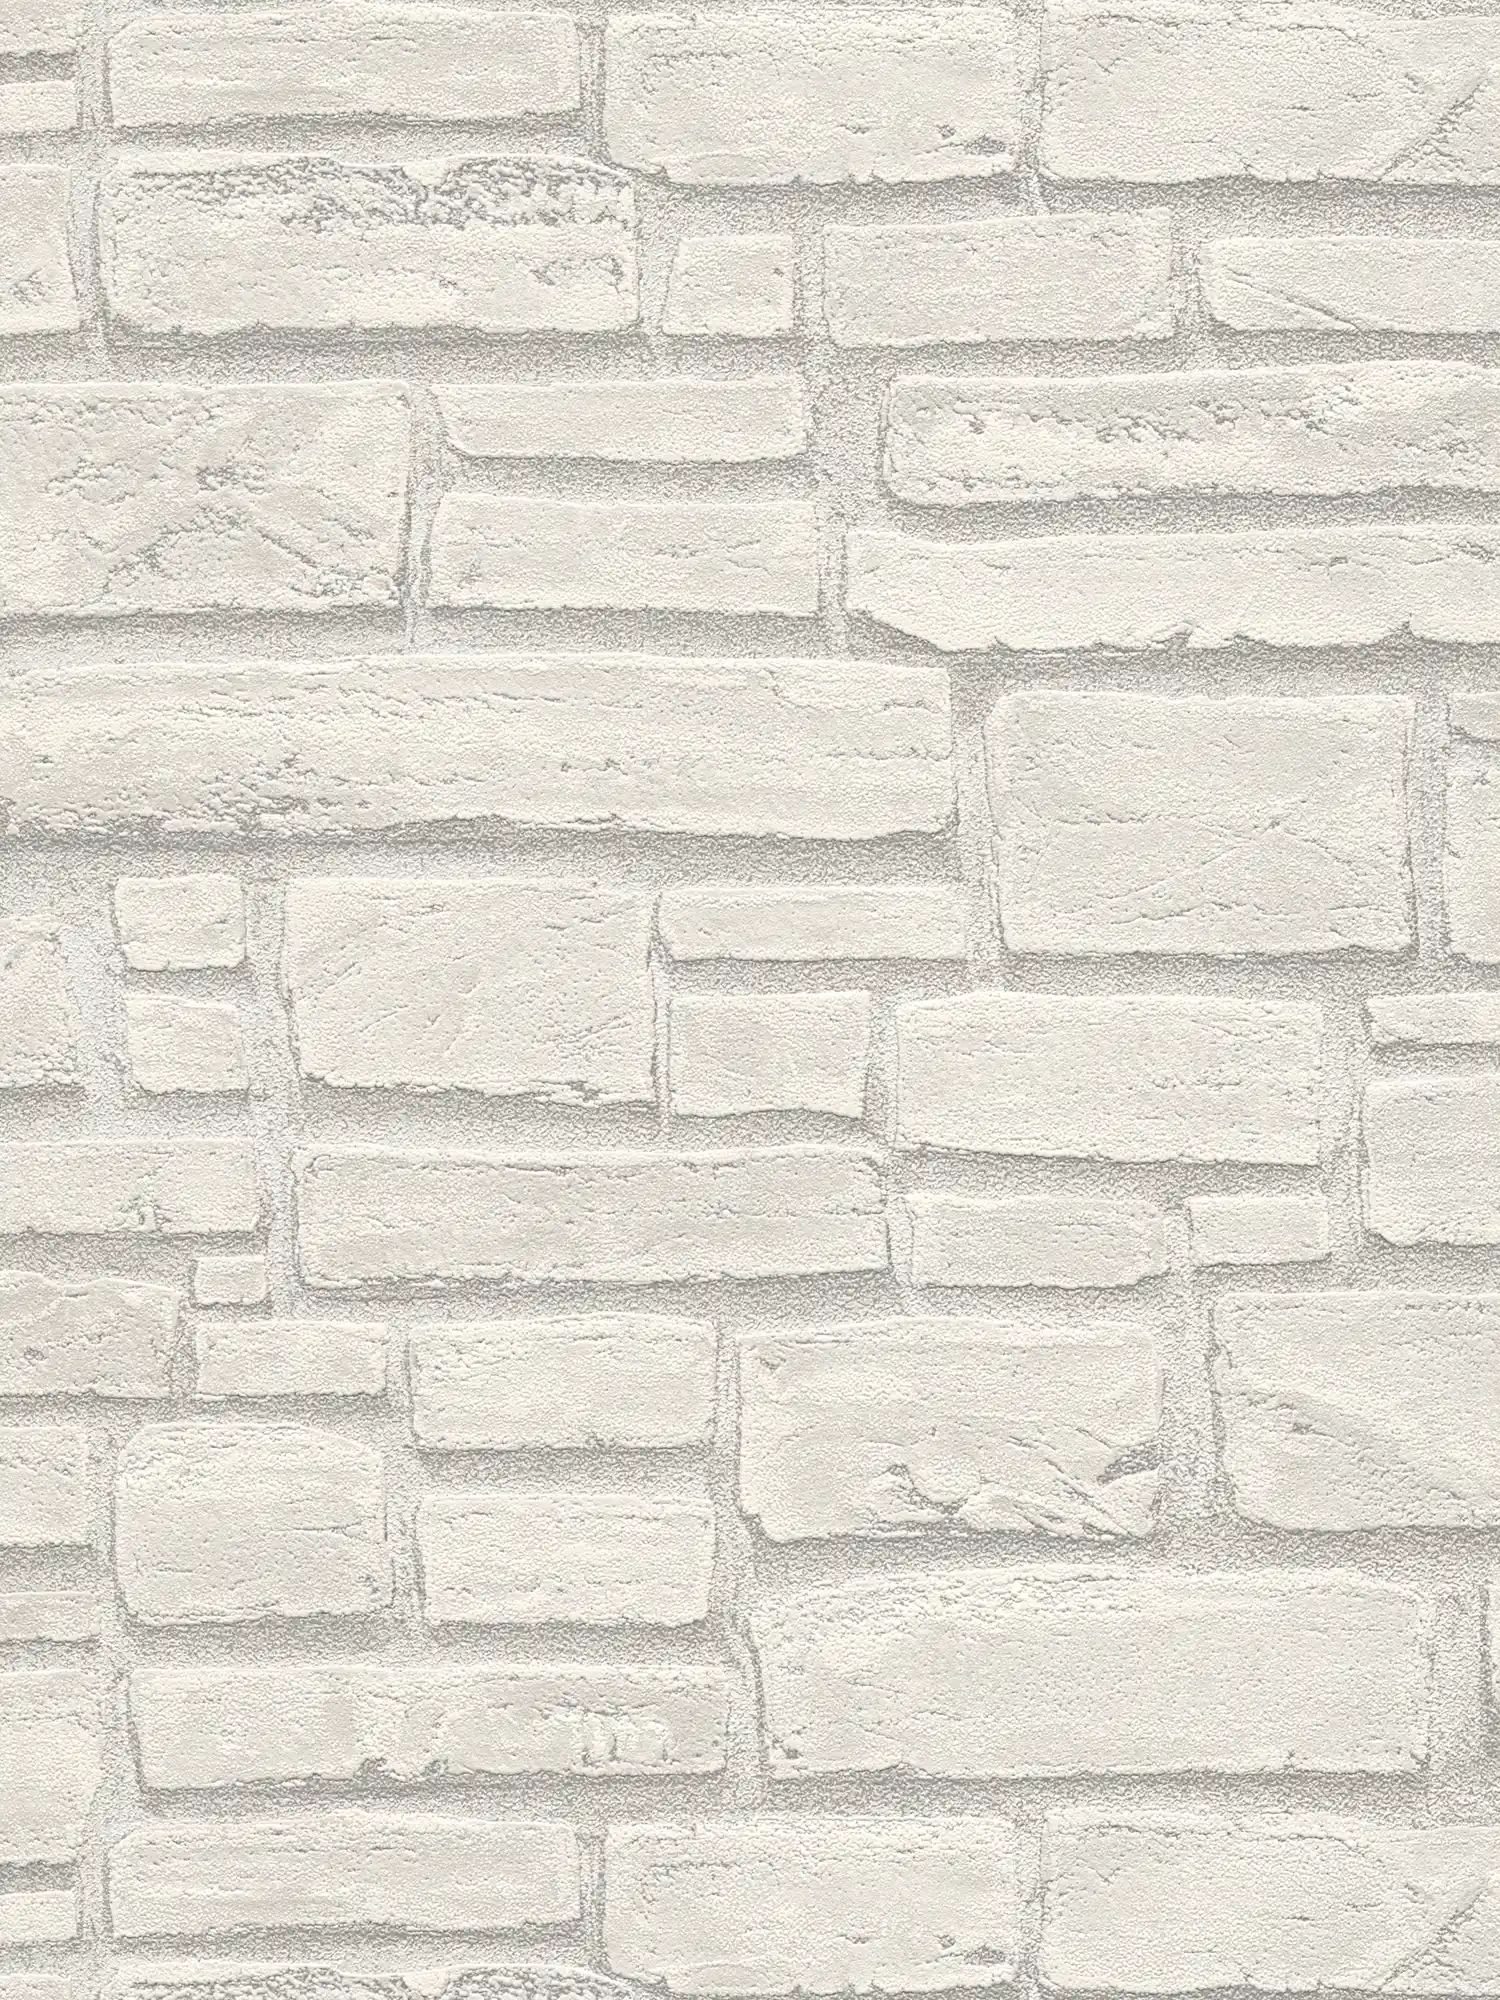 Masonry wallpaper with light grey stones - white, grey
